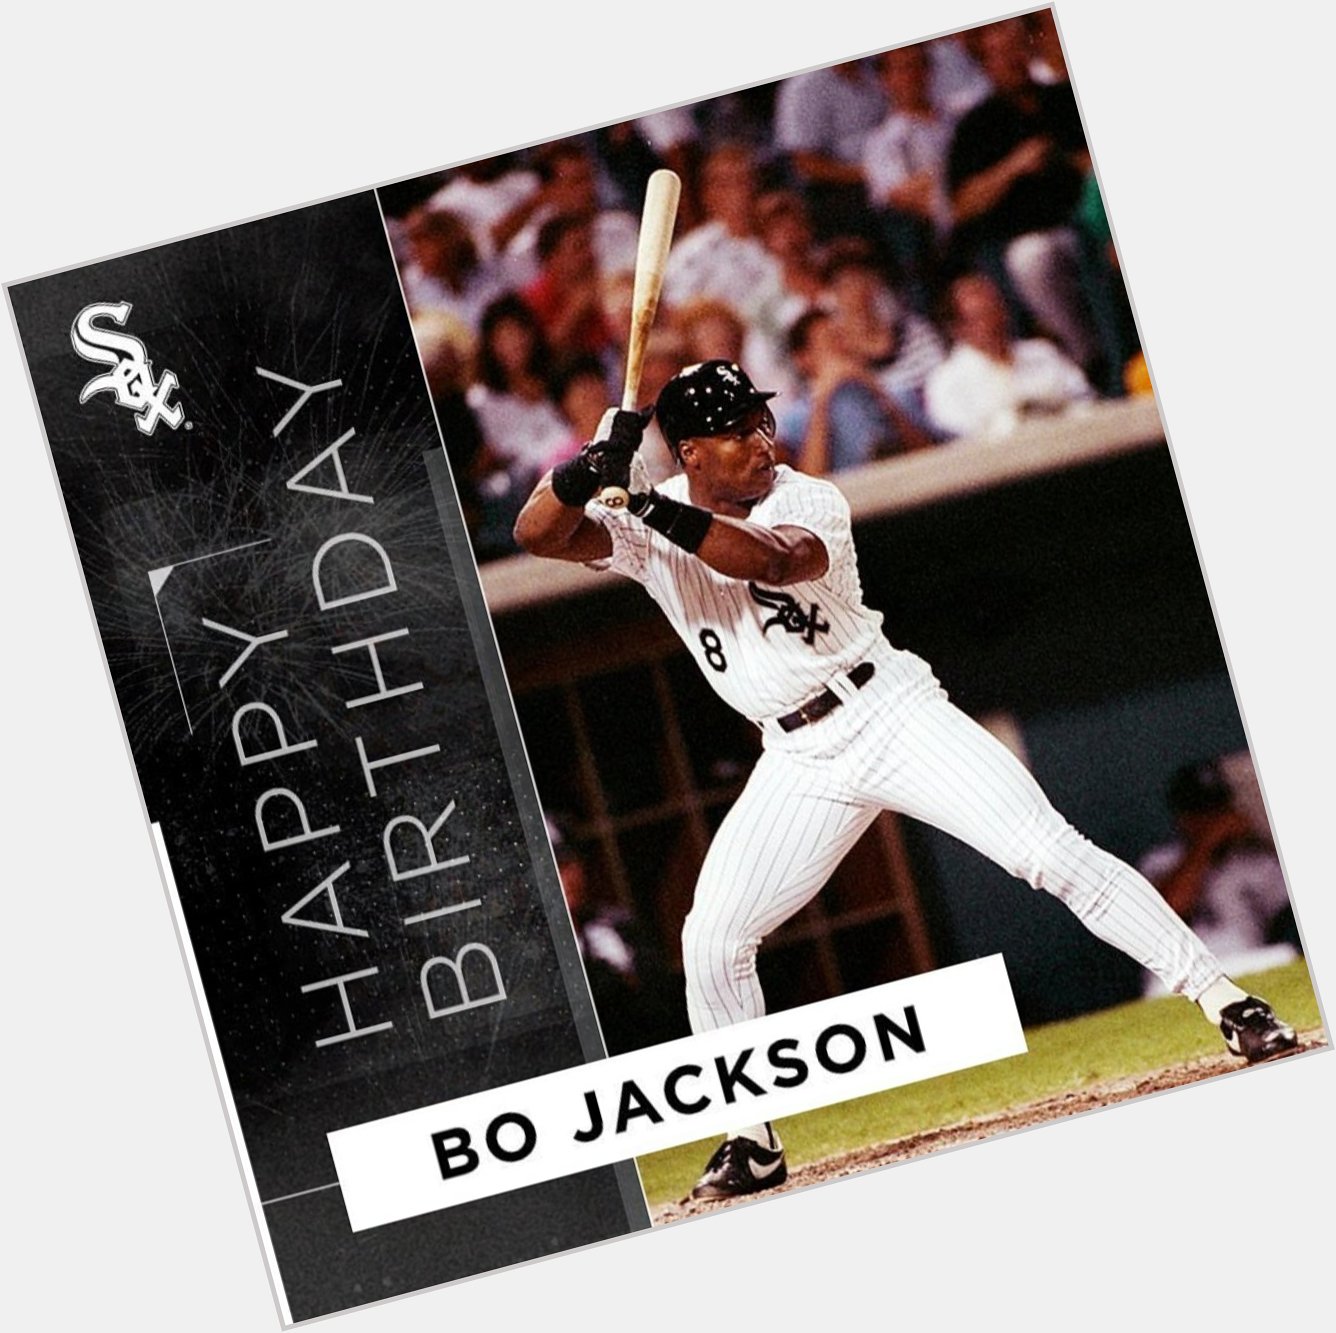 Happy birthday to Bo Jackson.  